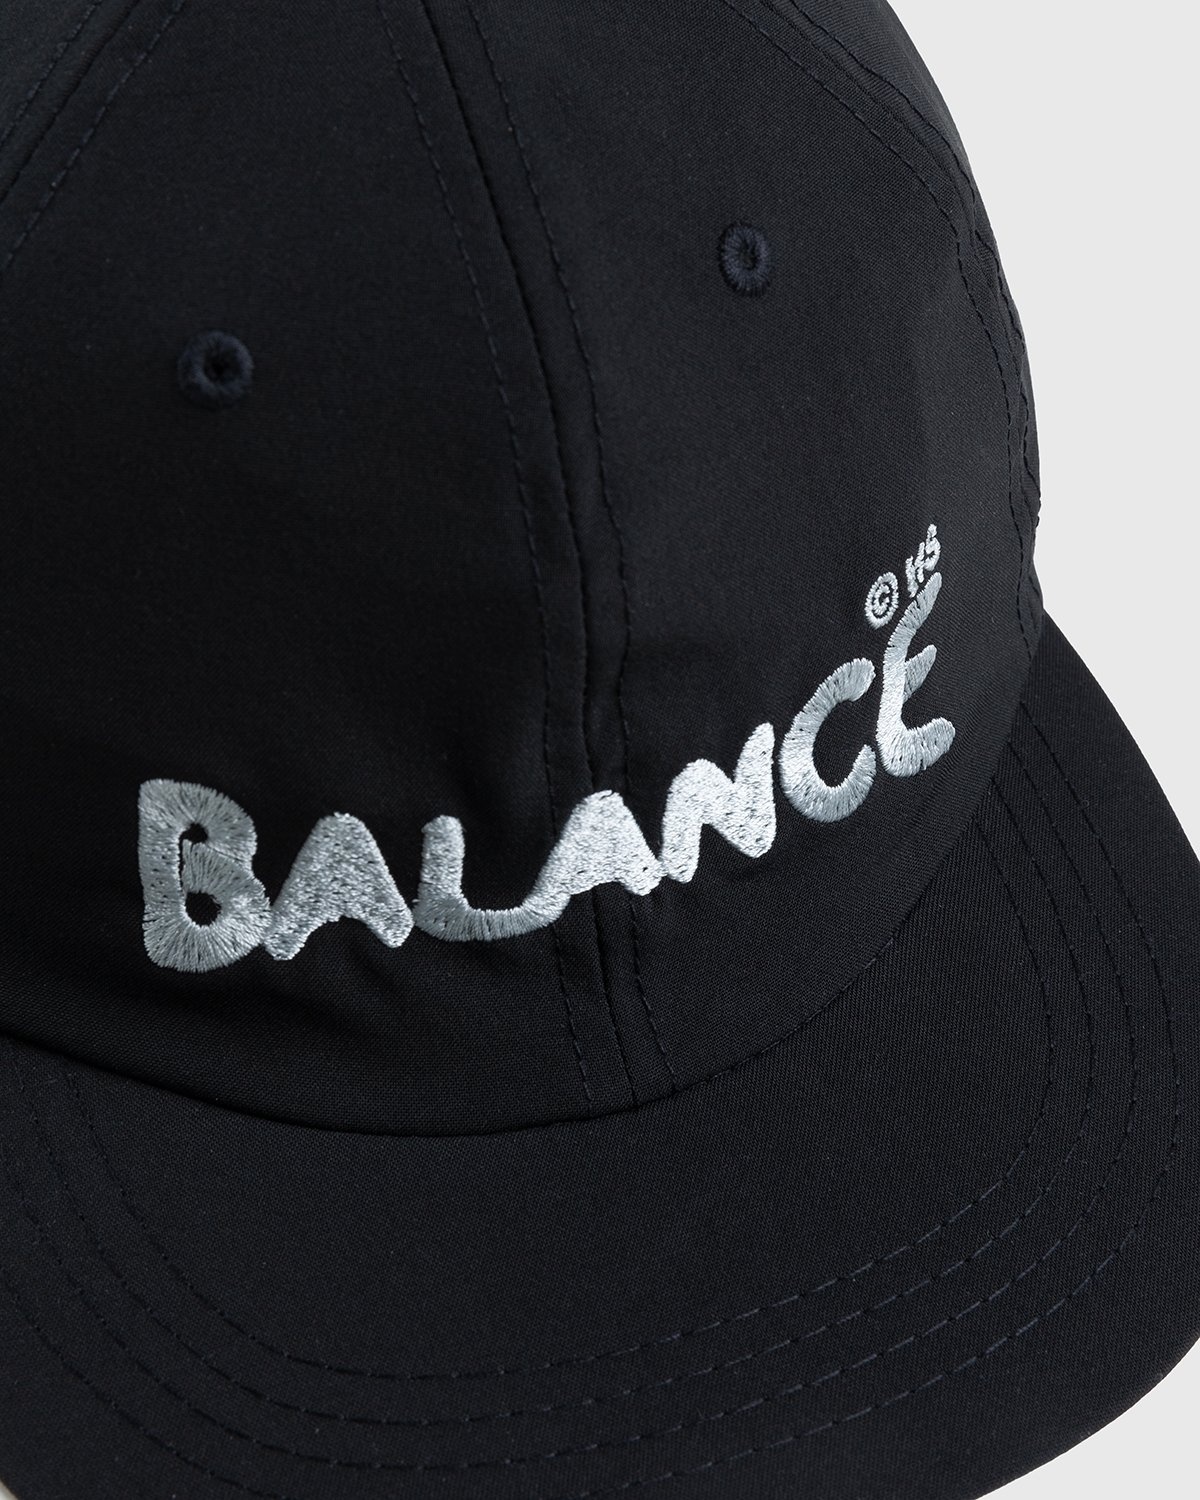 Satisfy x Highsnobiety – HS Sports Balance Running Cap Black - Hats - Black - Image 4